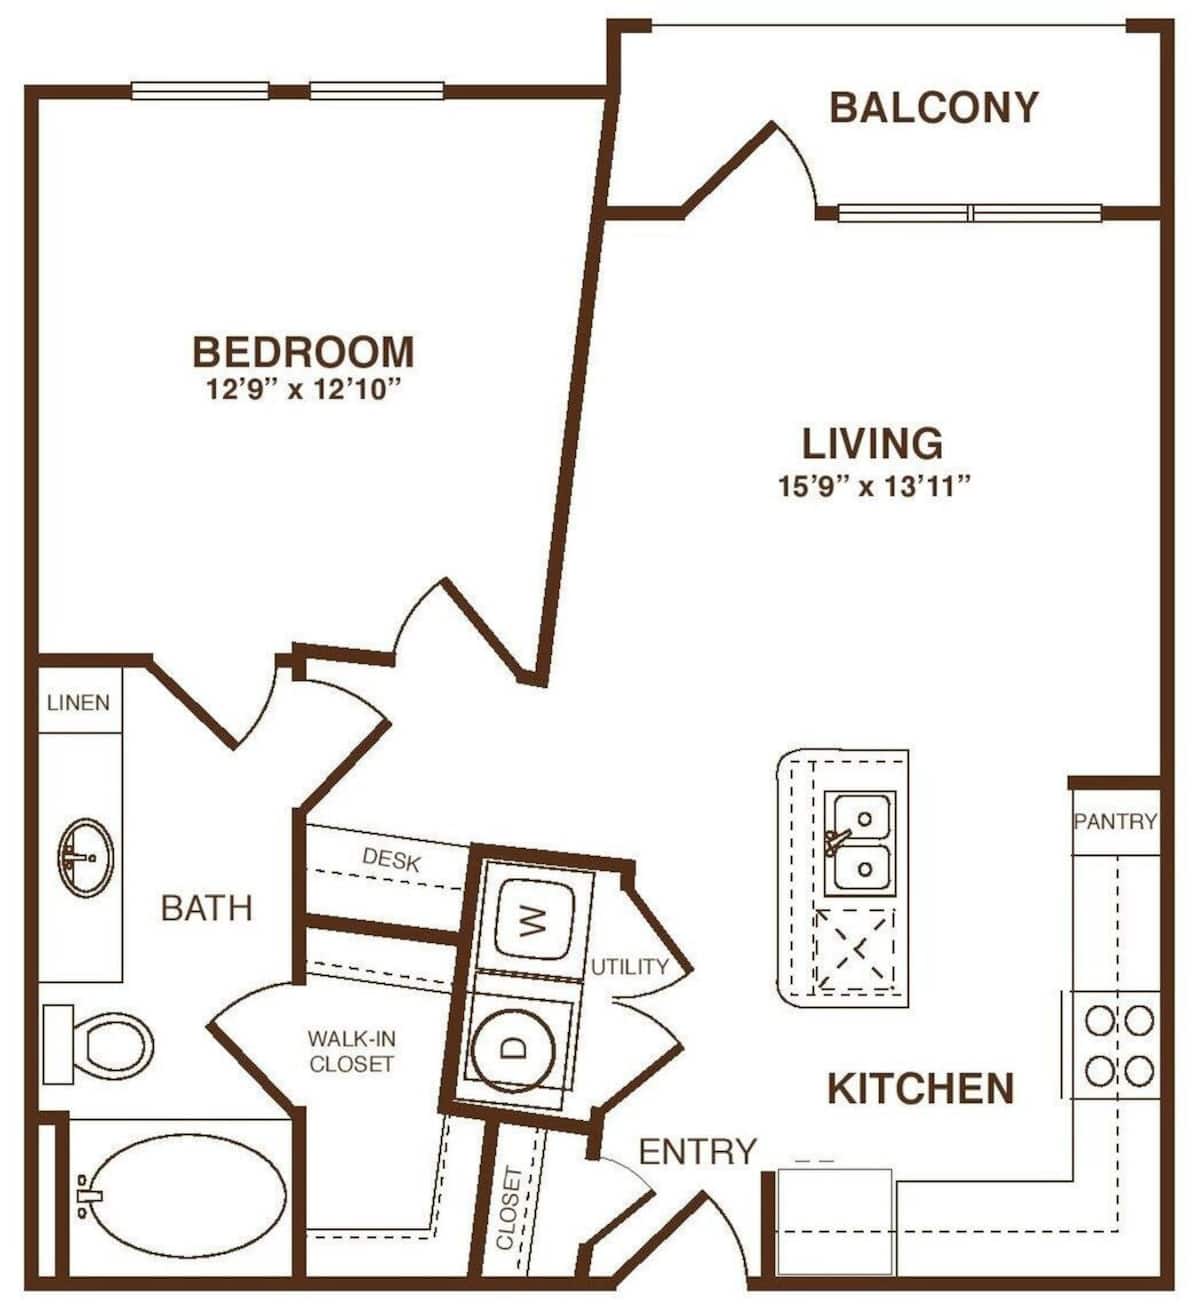 Floorplan diagram for The Huntington, showing 1 bedroom